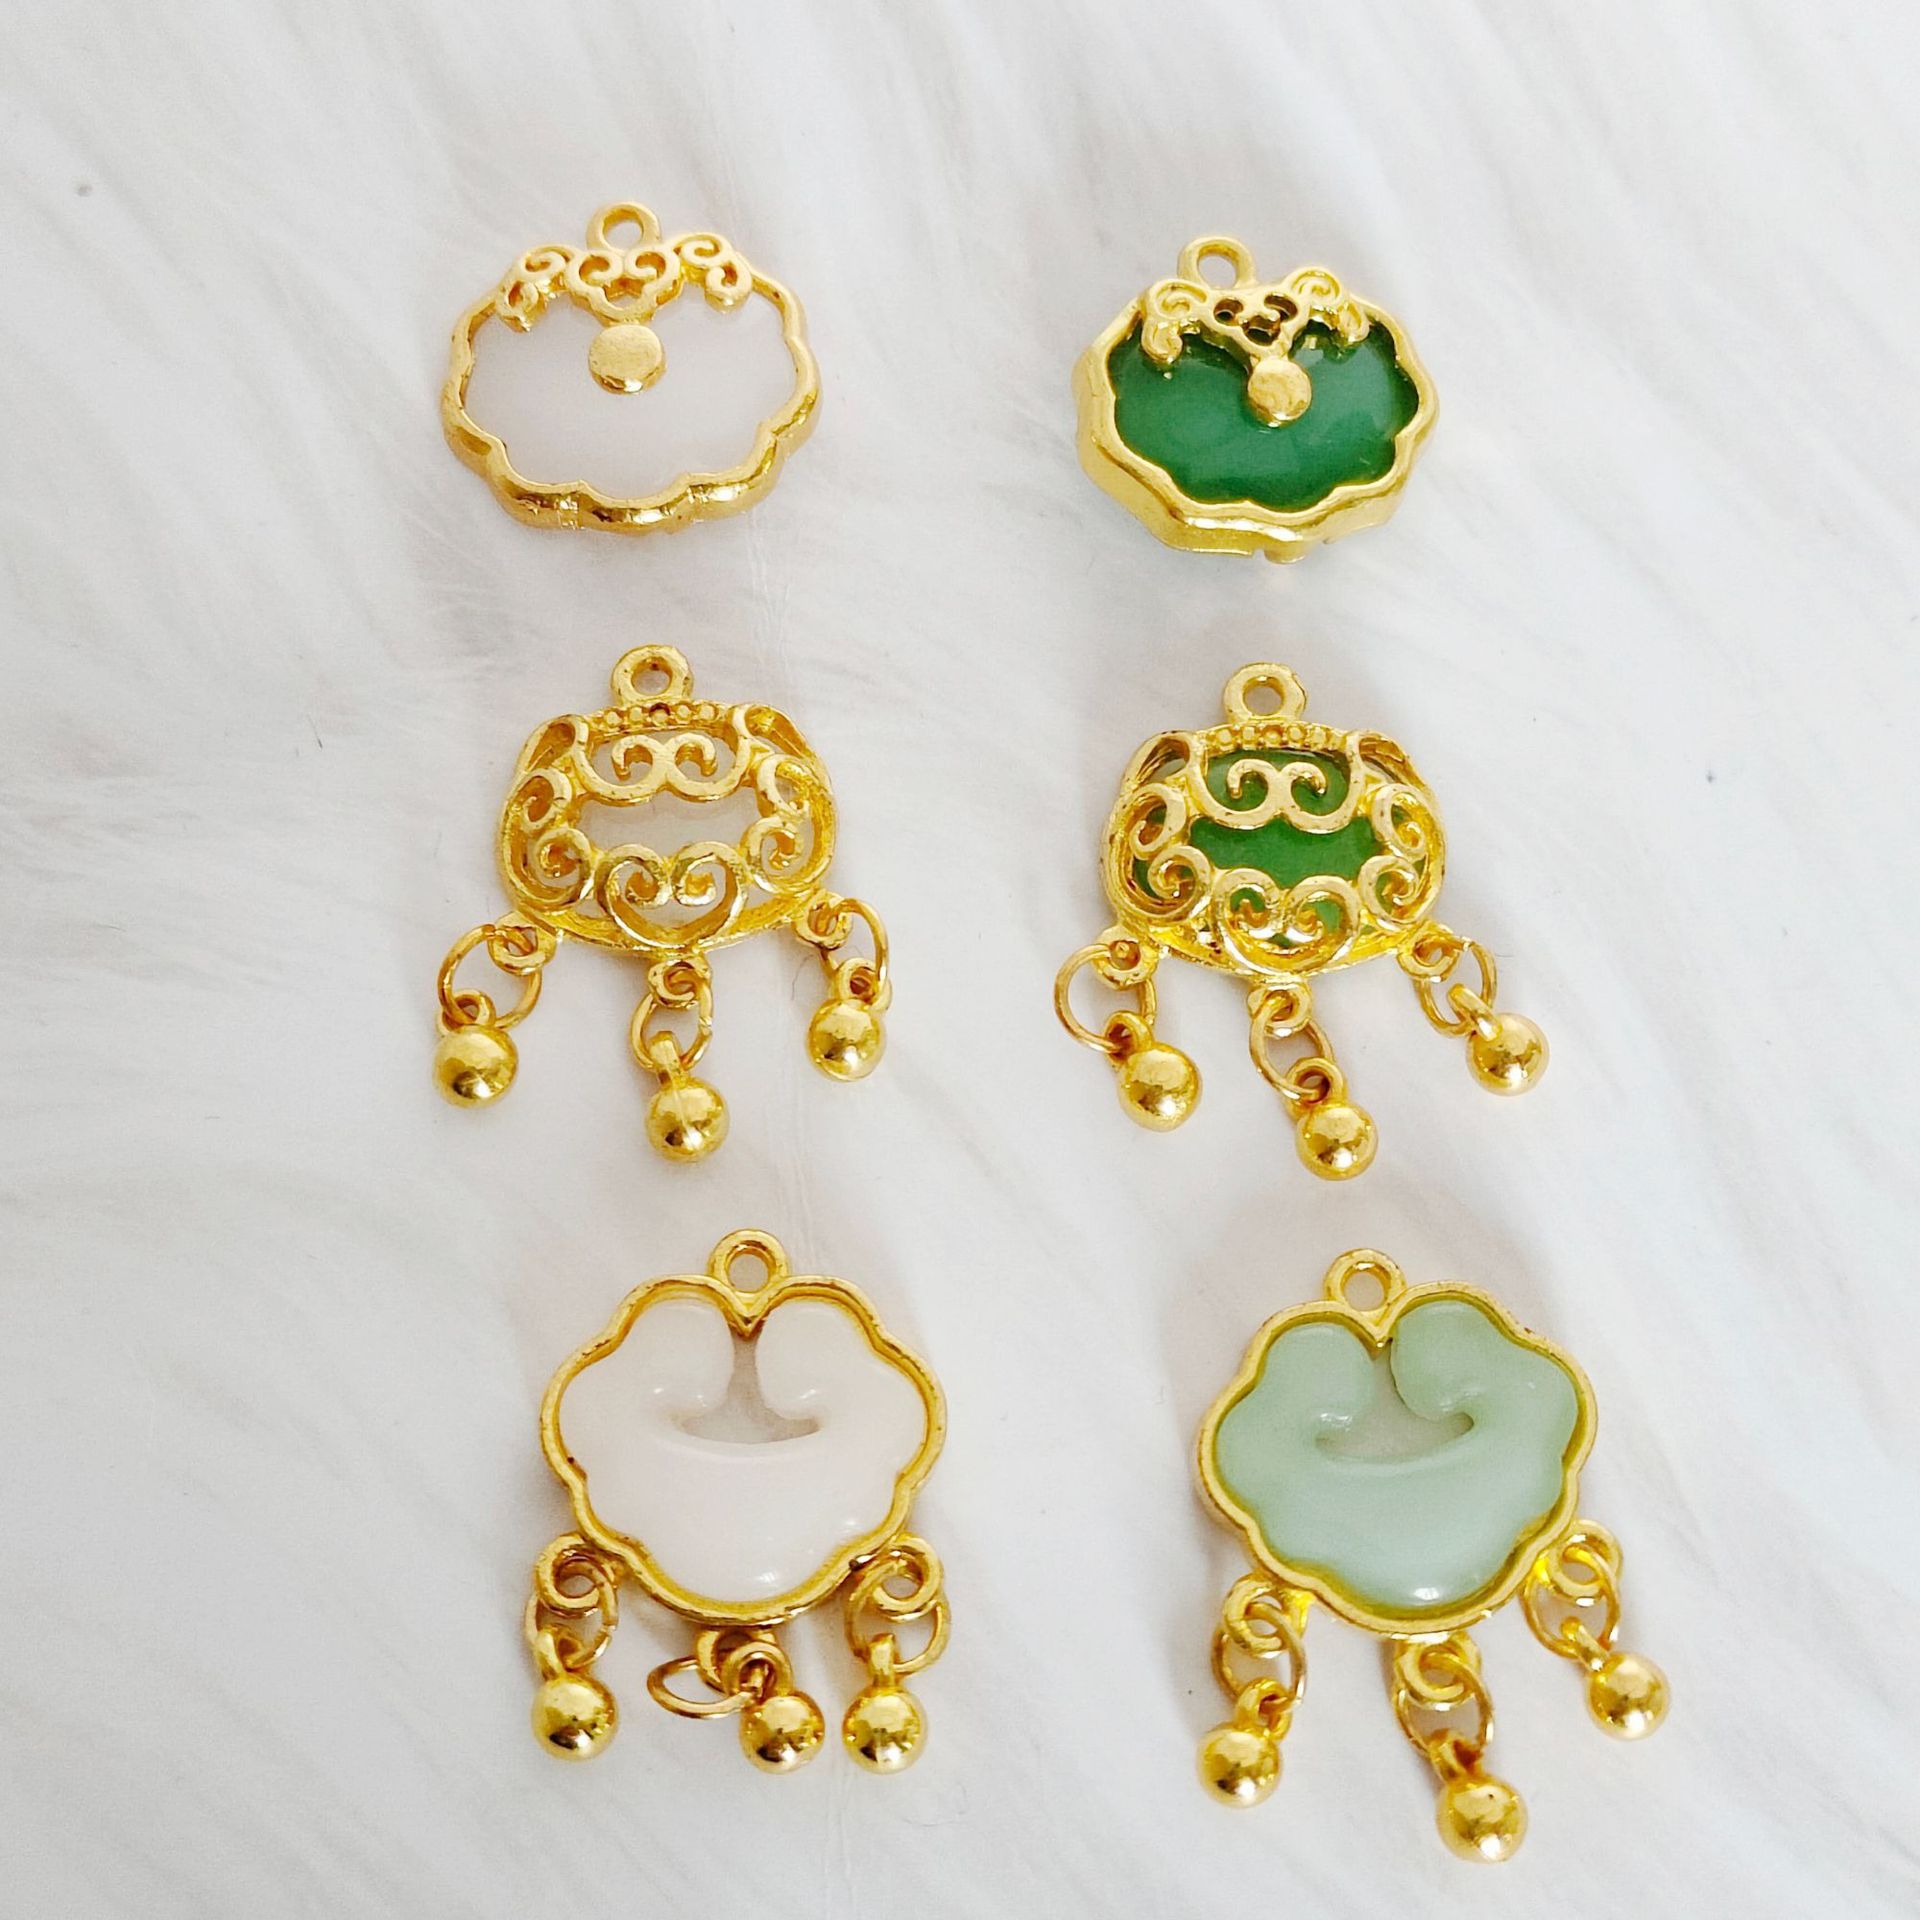 Bell Bracelet Necklace Pendant Inlaid Jade Accessories Material Diy Jade Ruyi Lock Zinc Alloy Jewelry Accessories